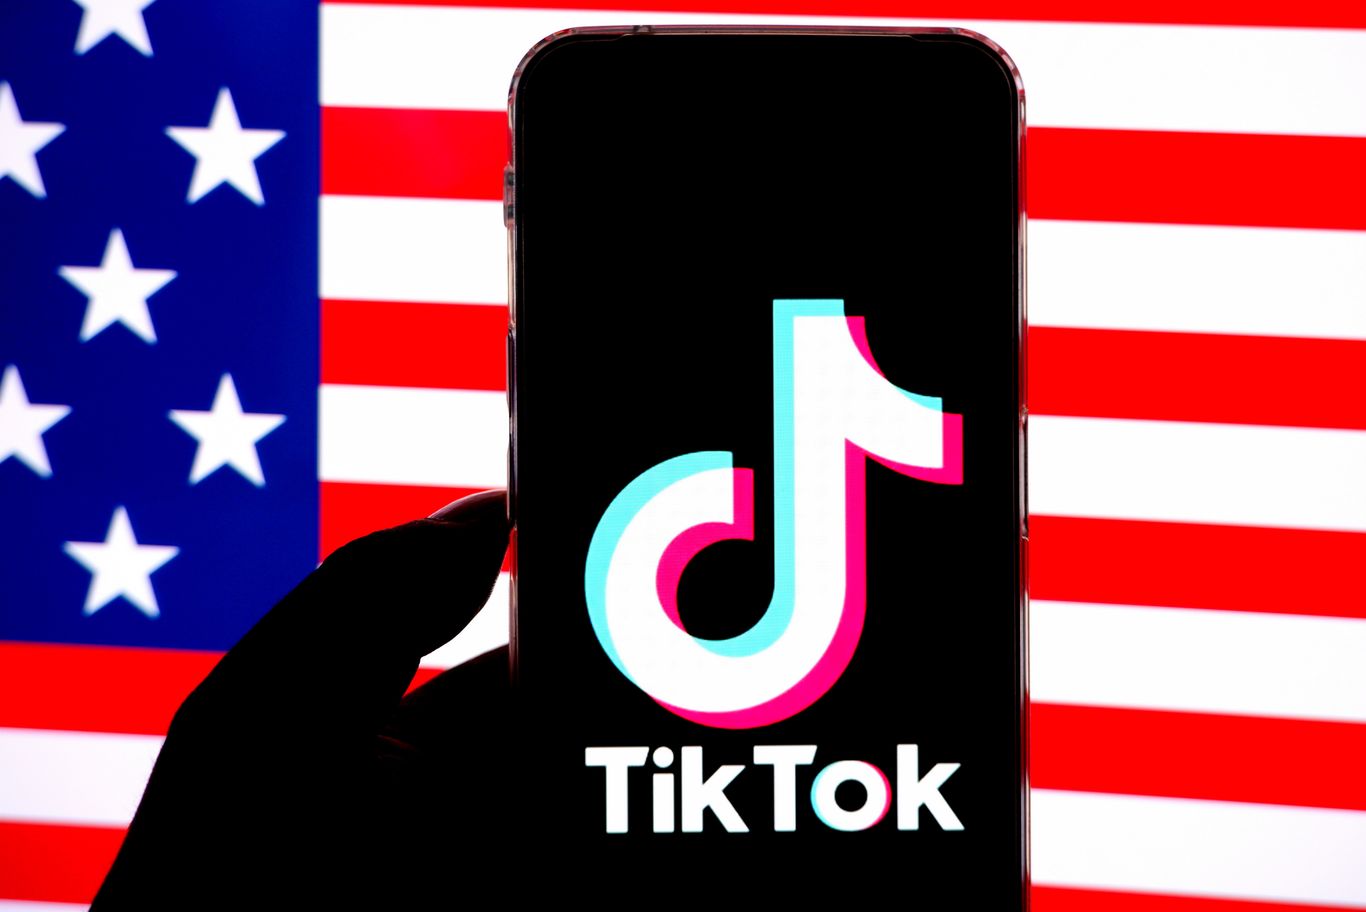 Bipartisan group of senators unveil bill targeting TikTok, other